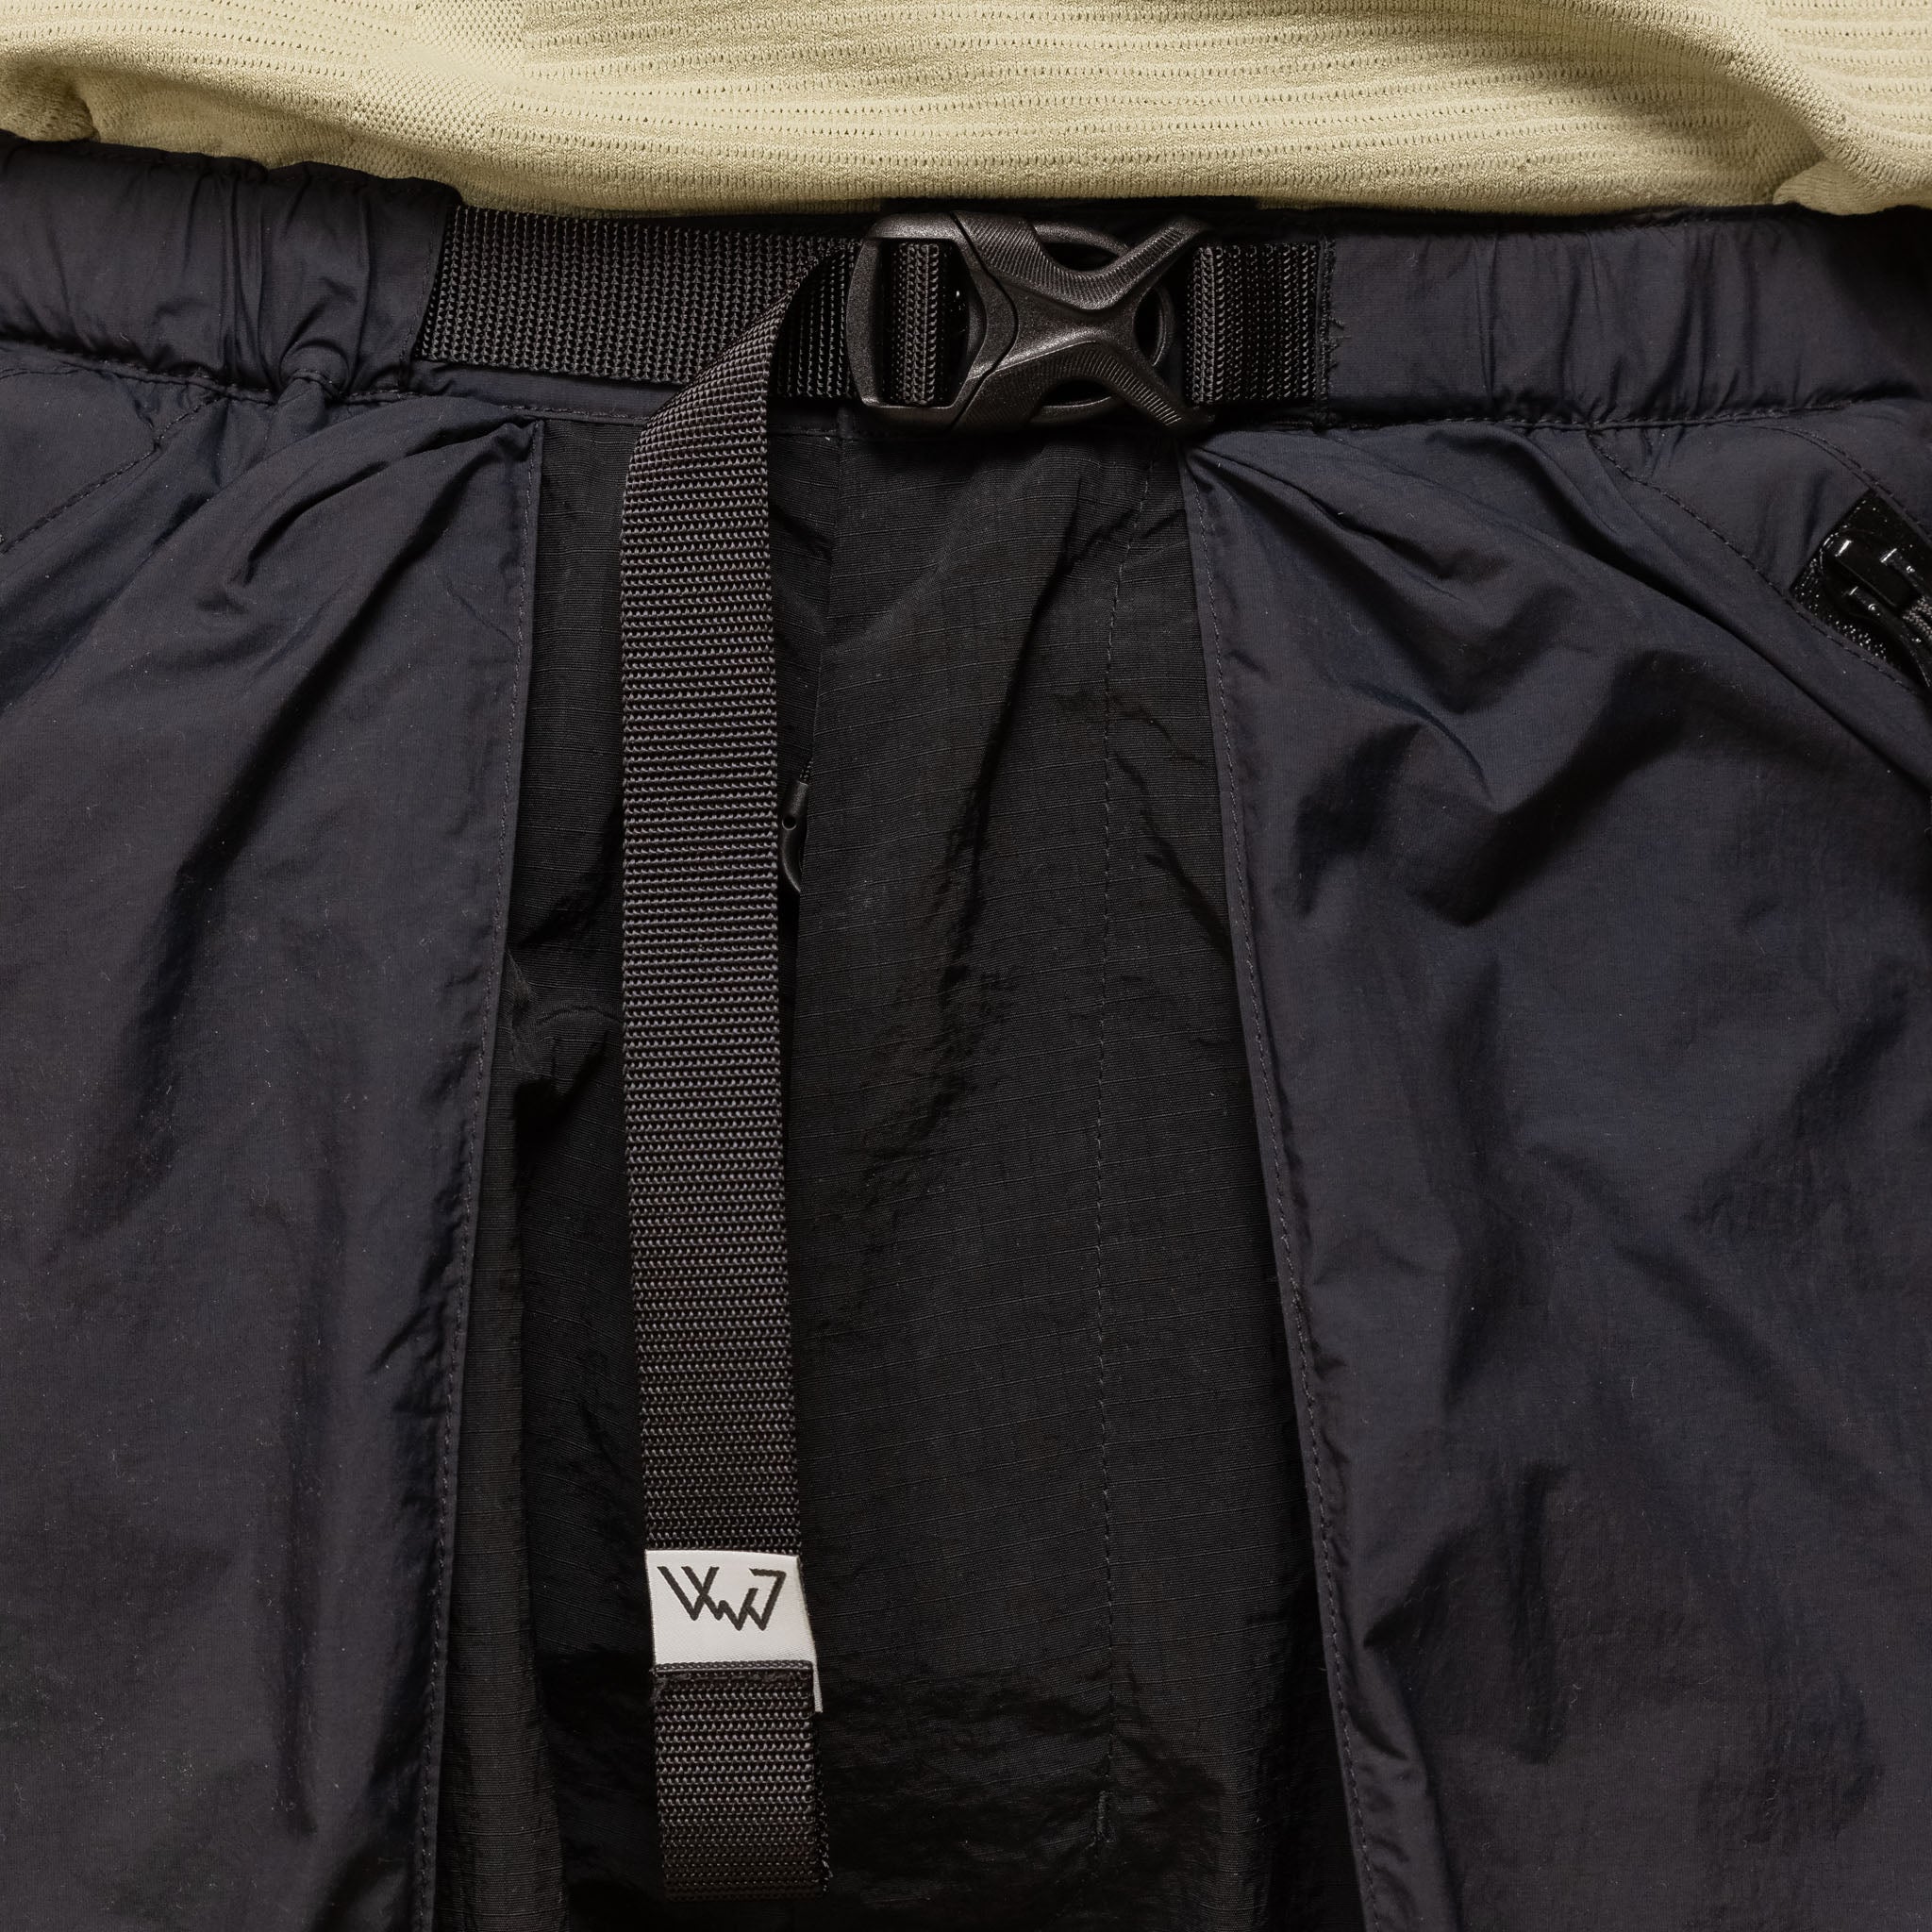 CMF Outdoor Garment - Kiltic Shorts Shorts - Black